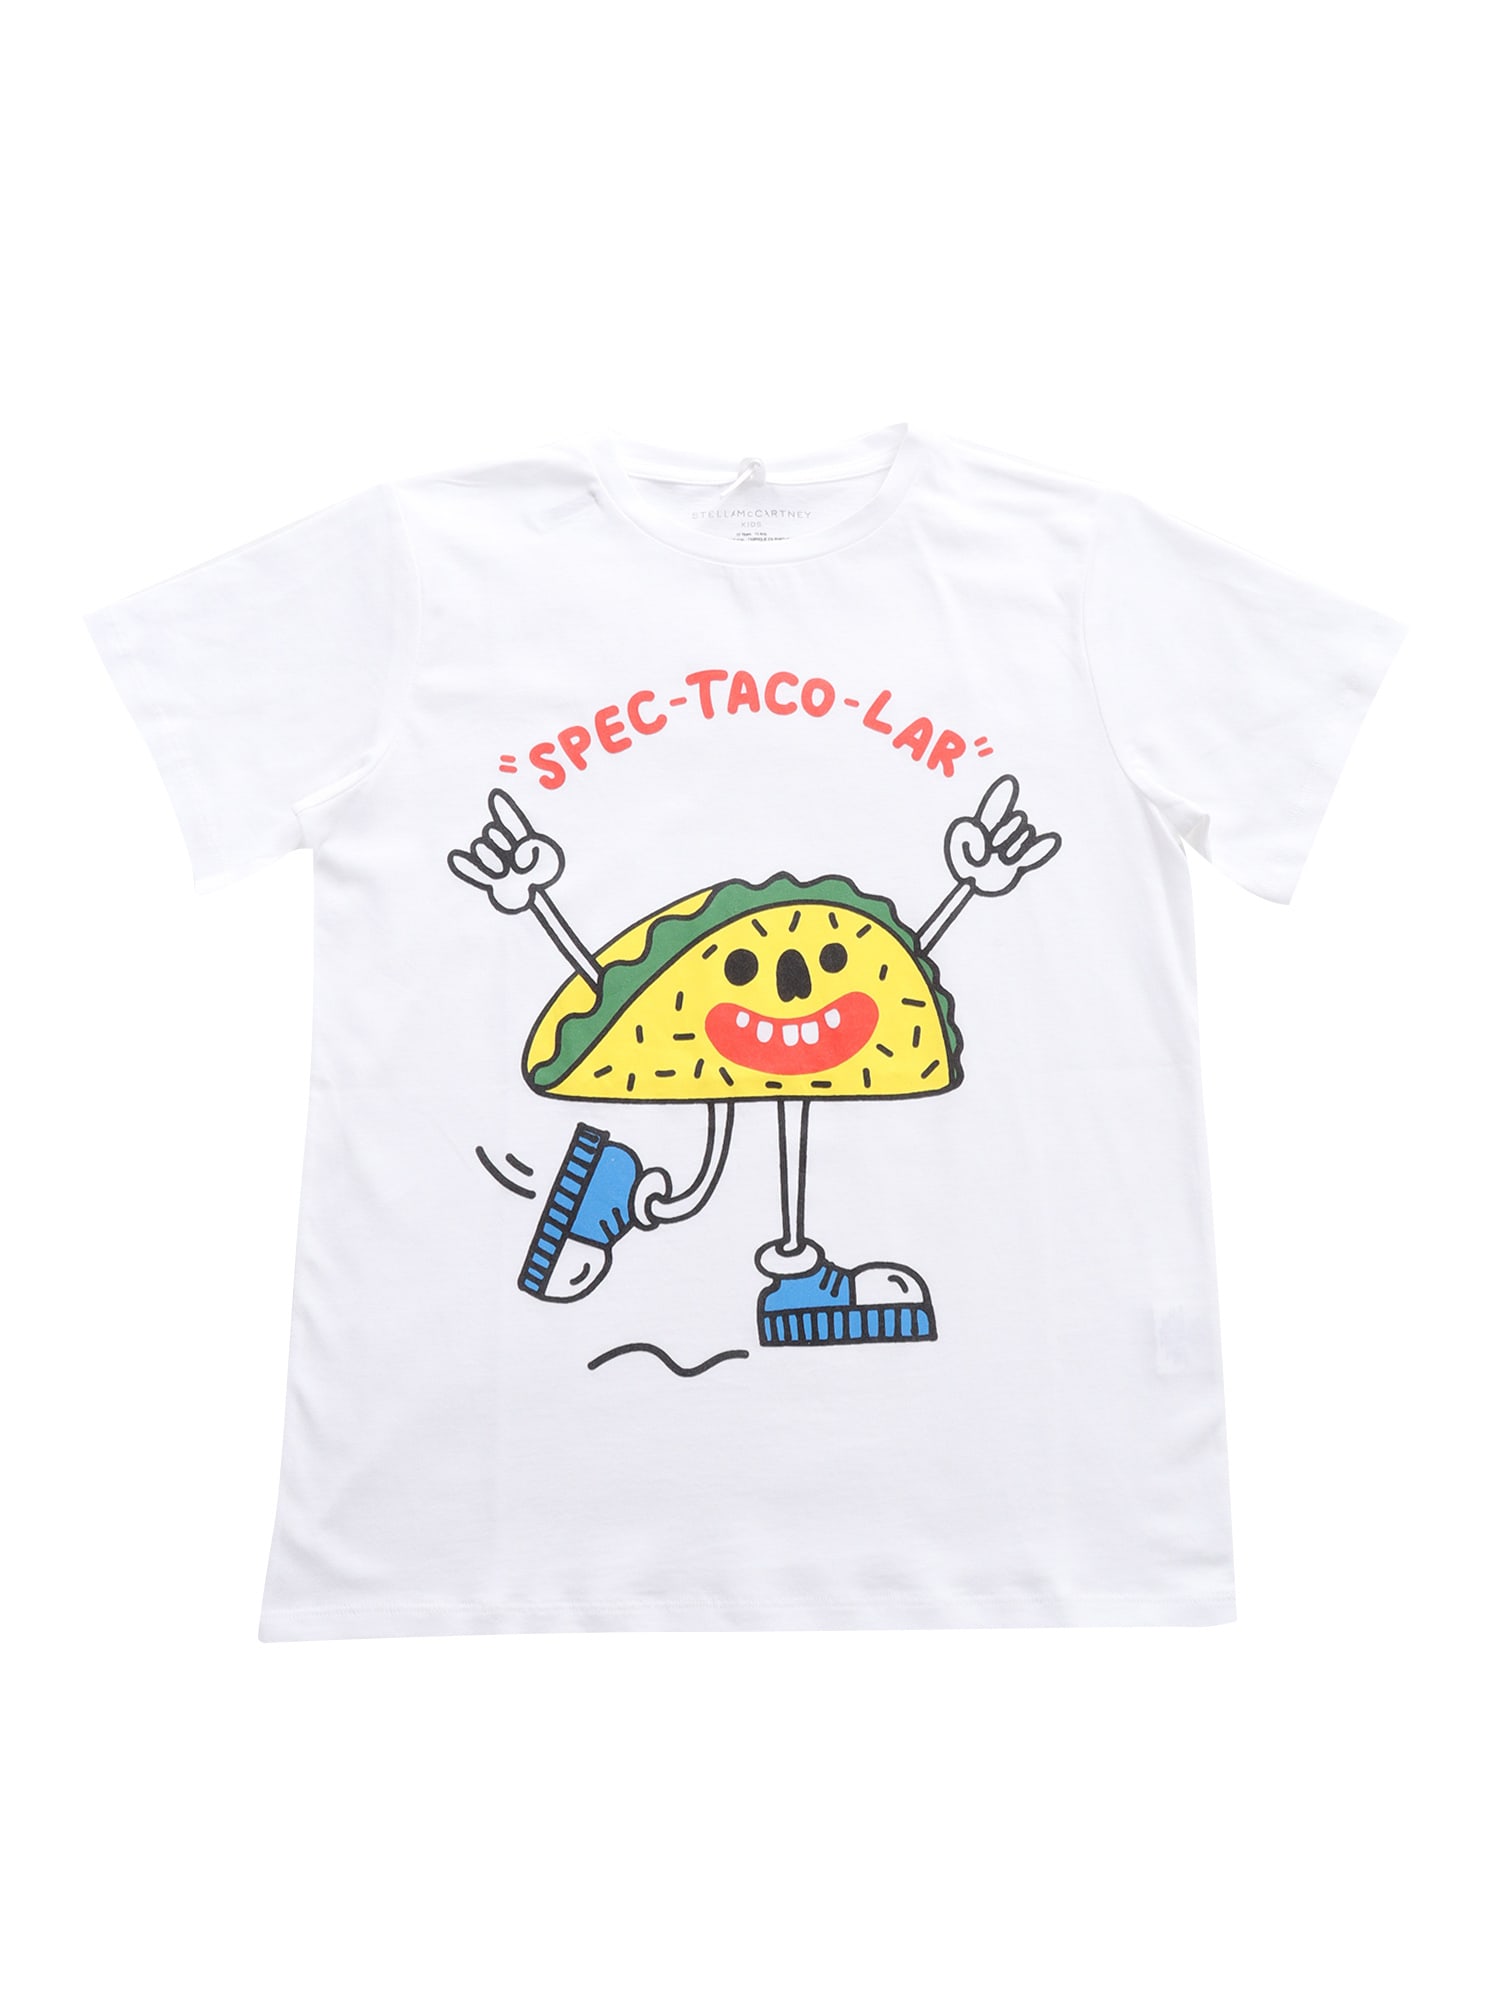 Stella McCartney Taco T-shirt